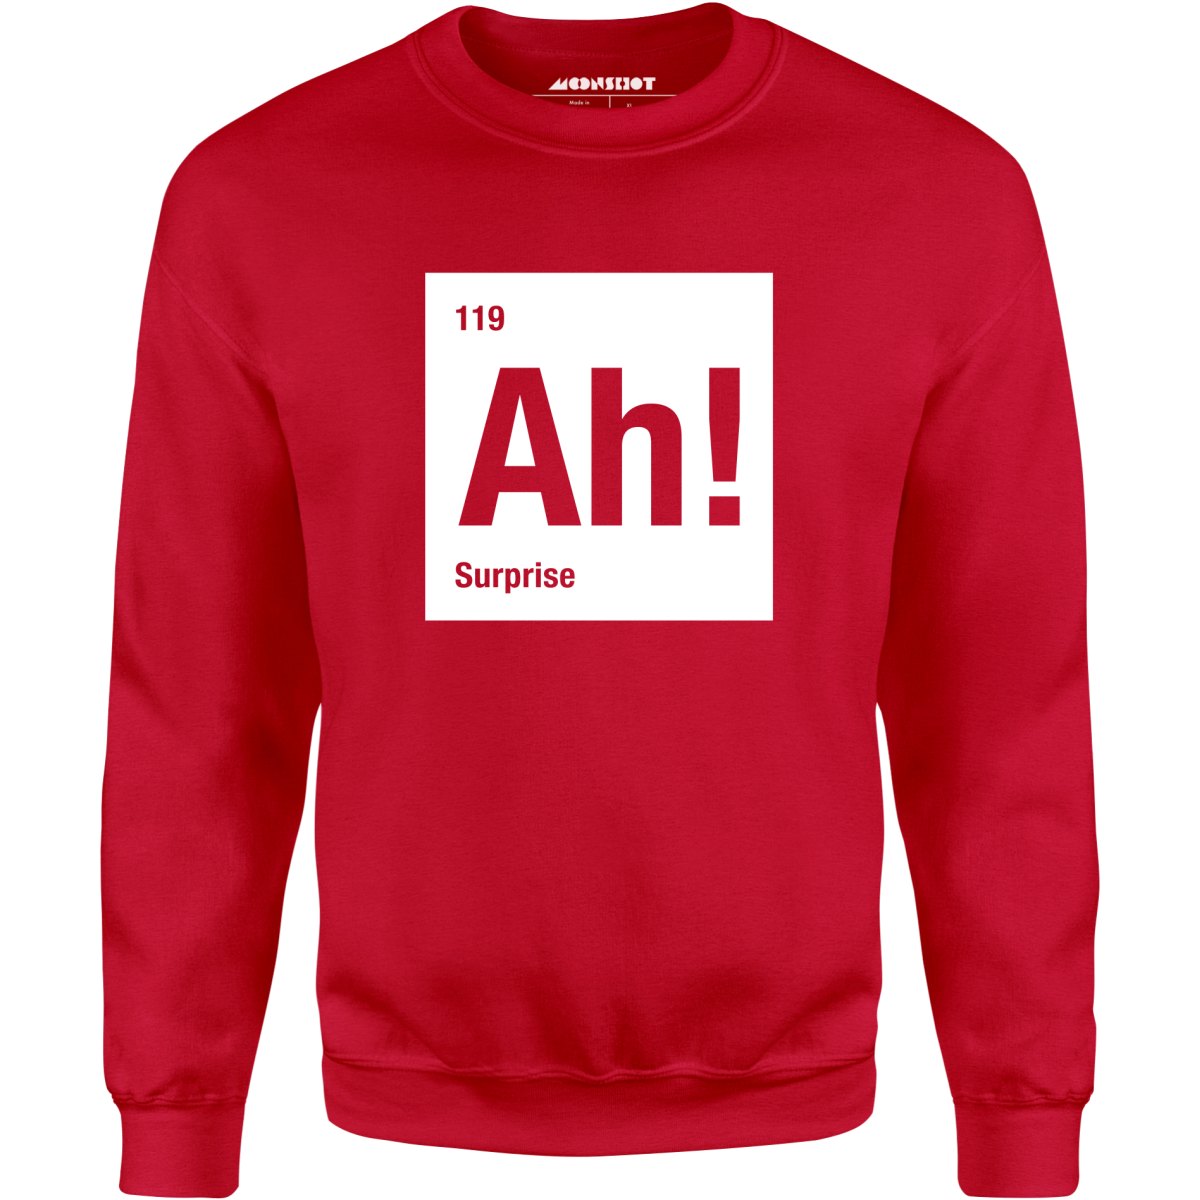 Ah! The Element of Surprise - Unisex Sweatshirt